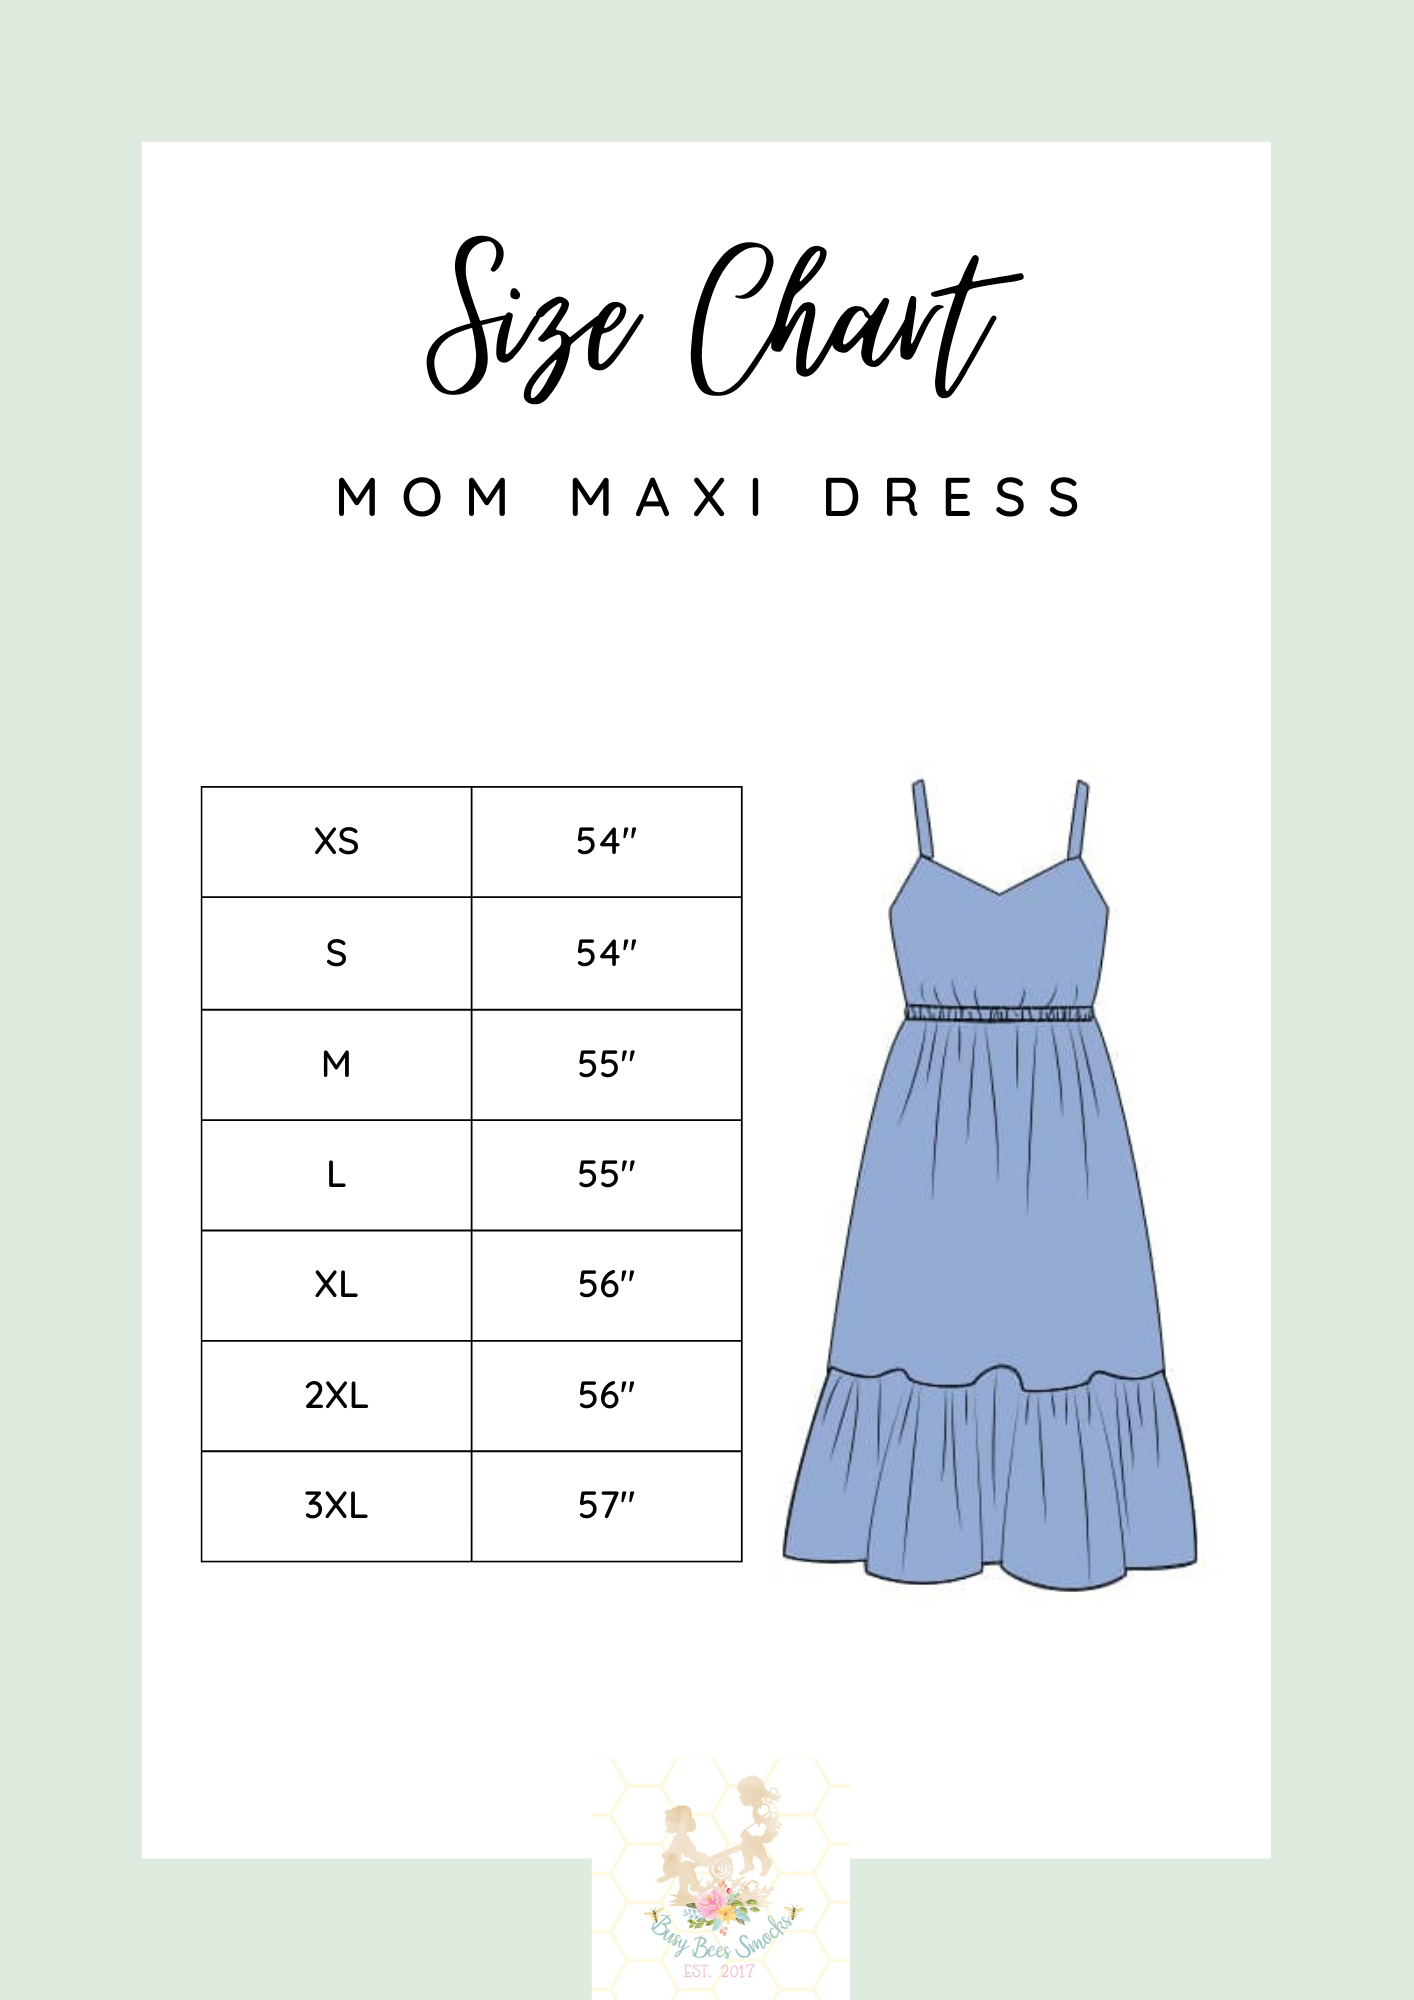 Mom Maxi Dress Size Chart